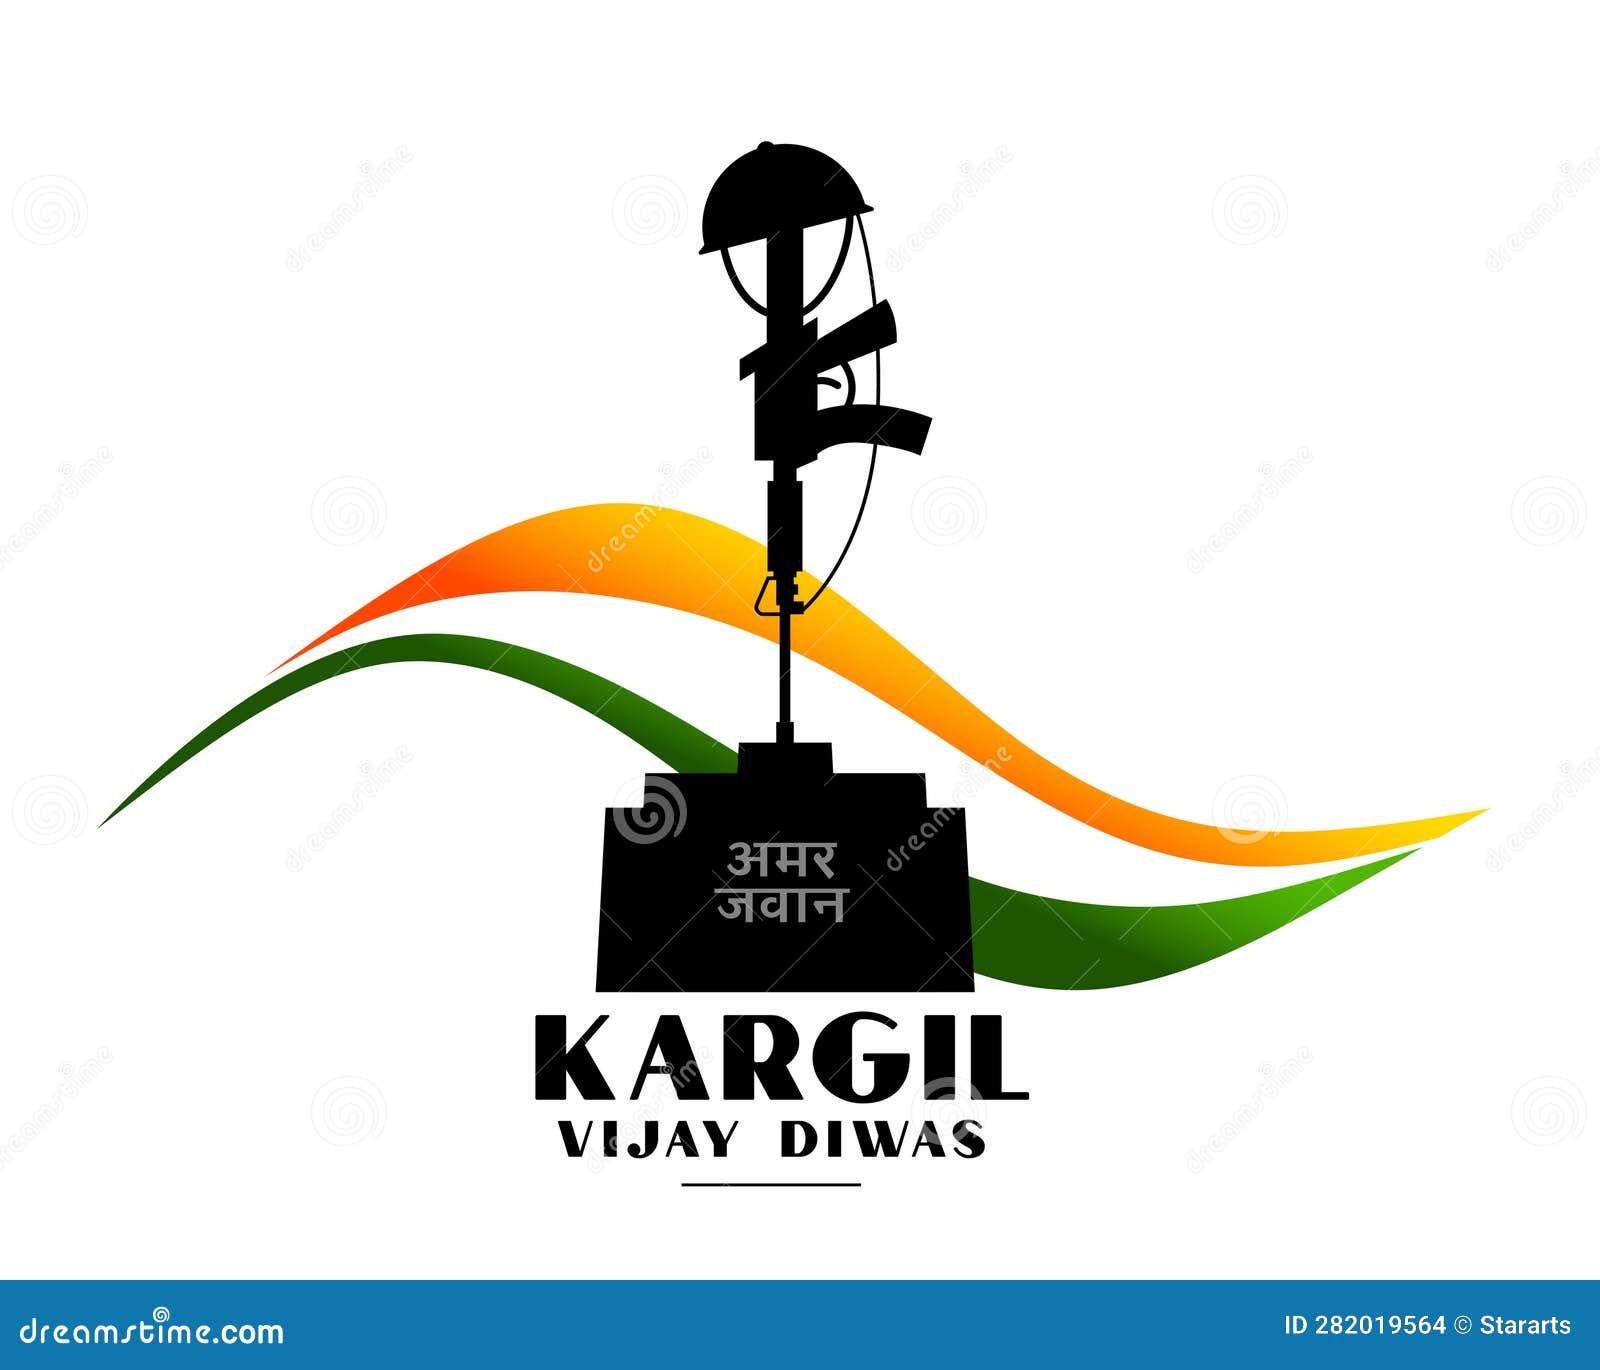 26th july kargil vijay diwas event background Vector Image